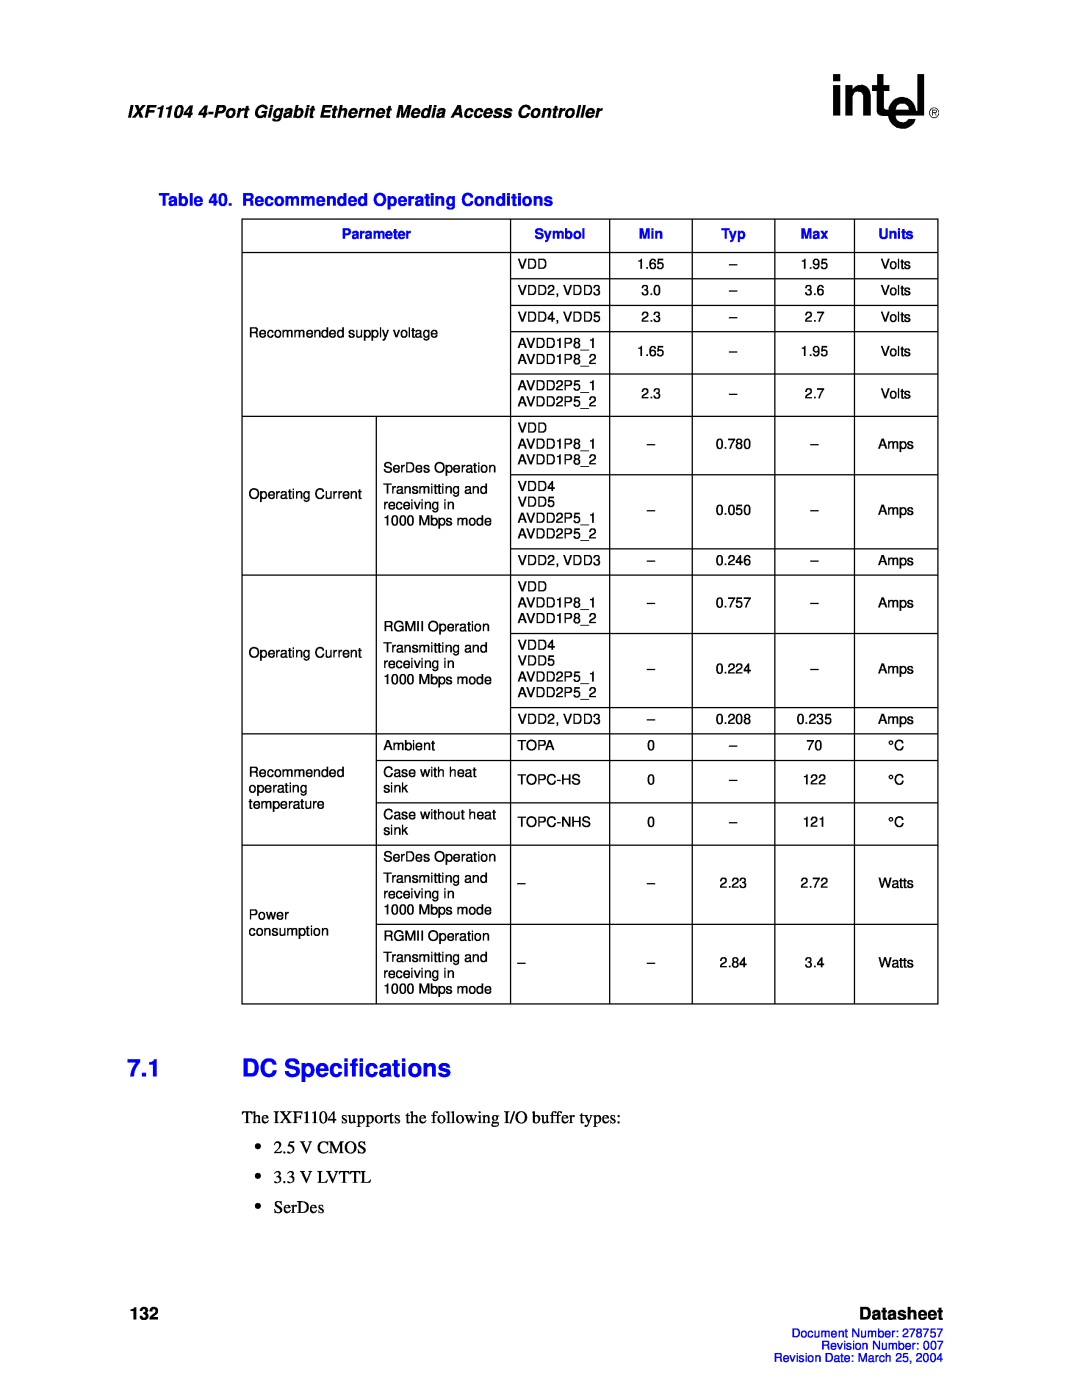 Intel IXF1104 manual 7.1DC Specifications, Datasheet 